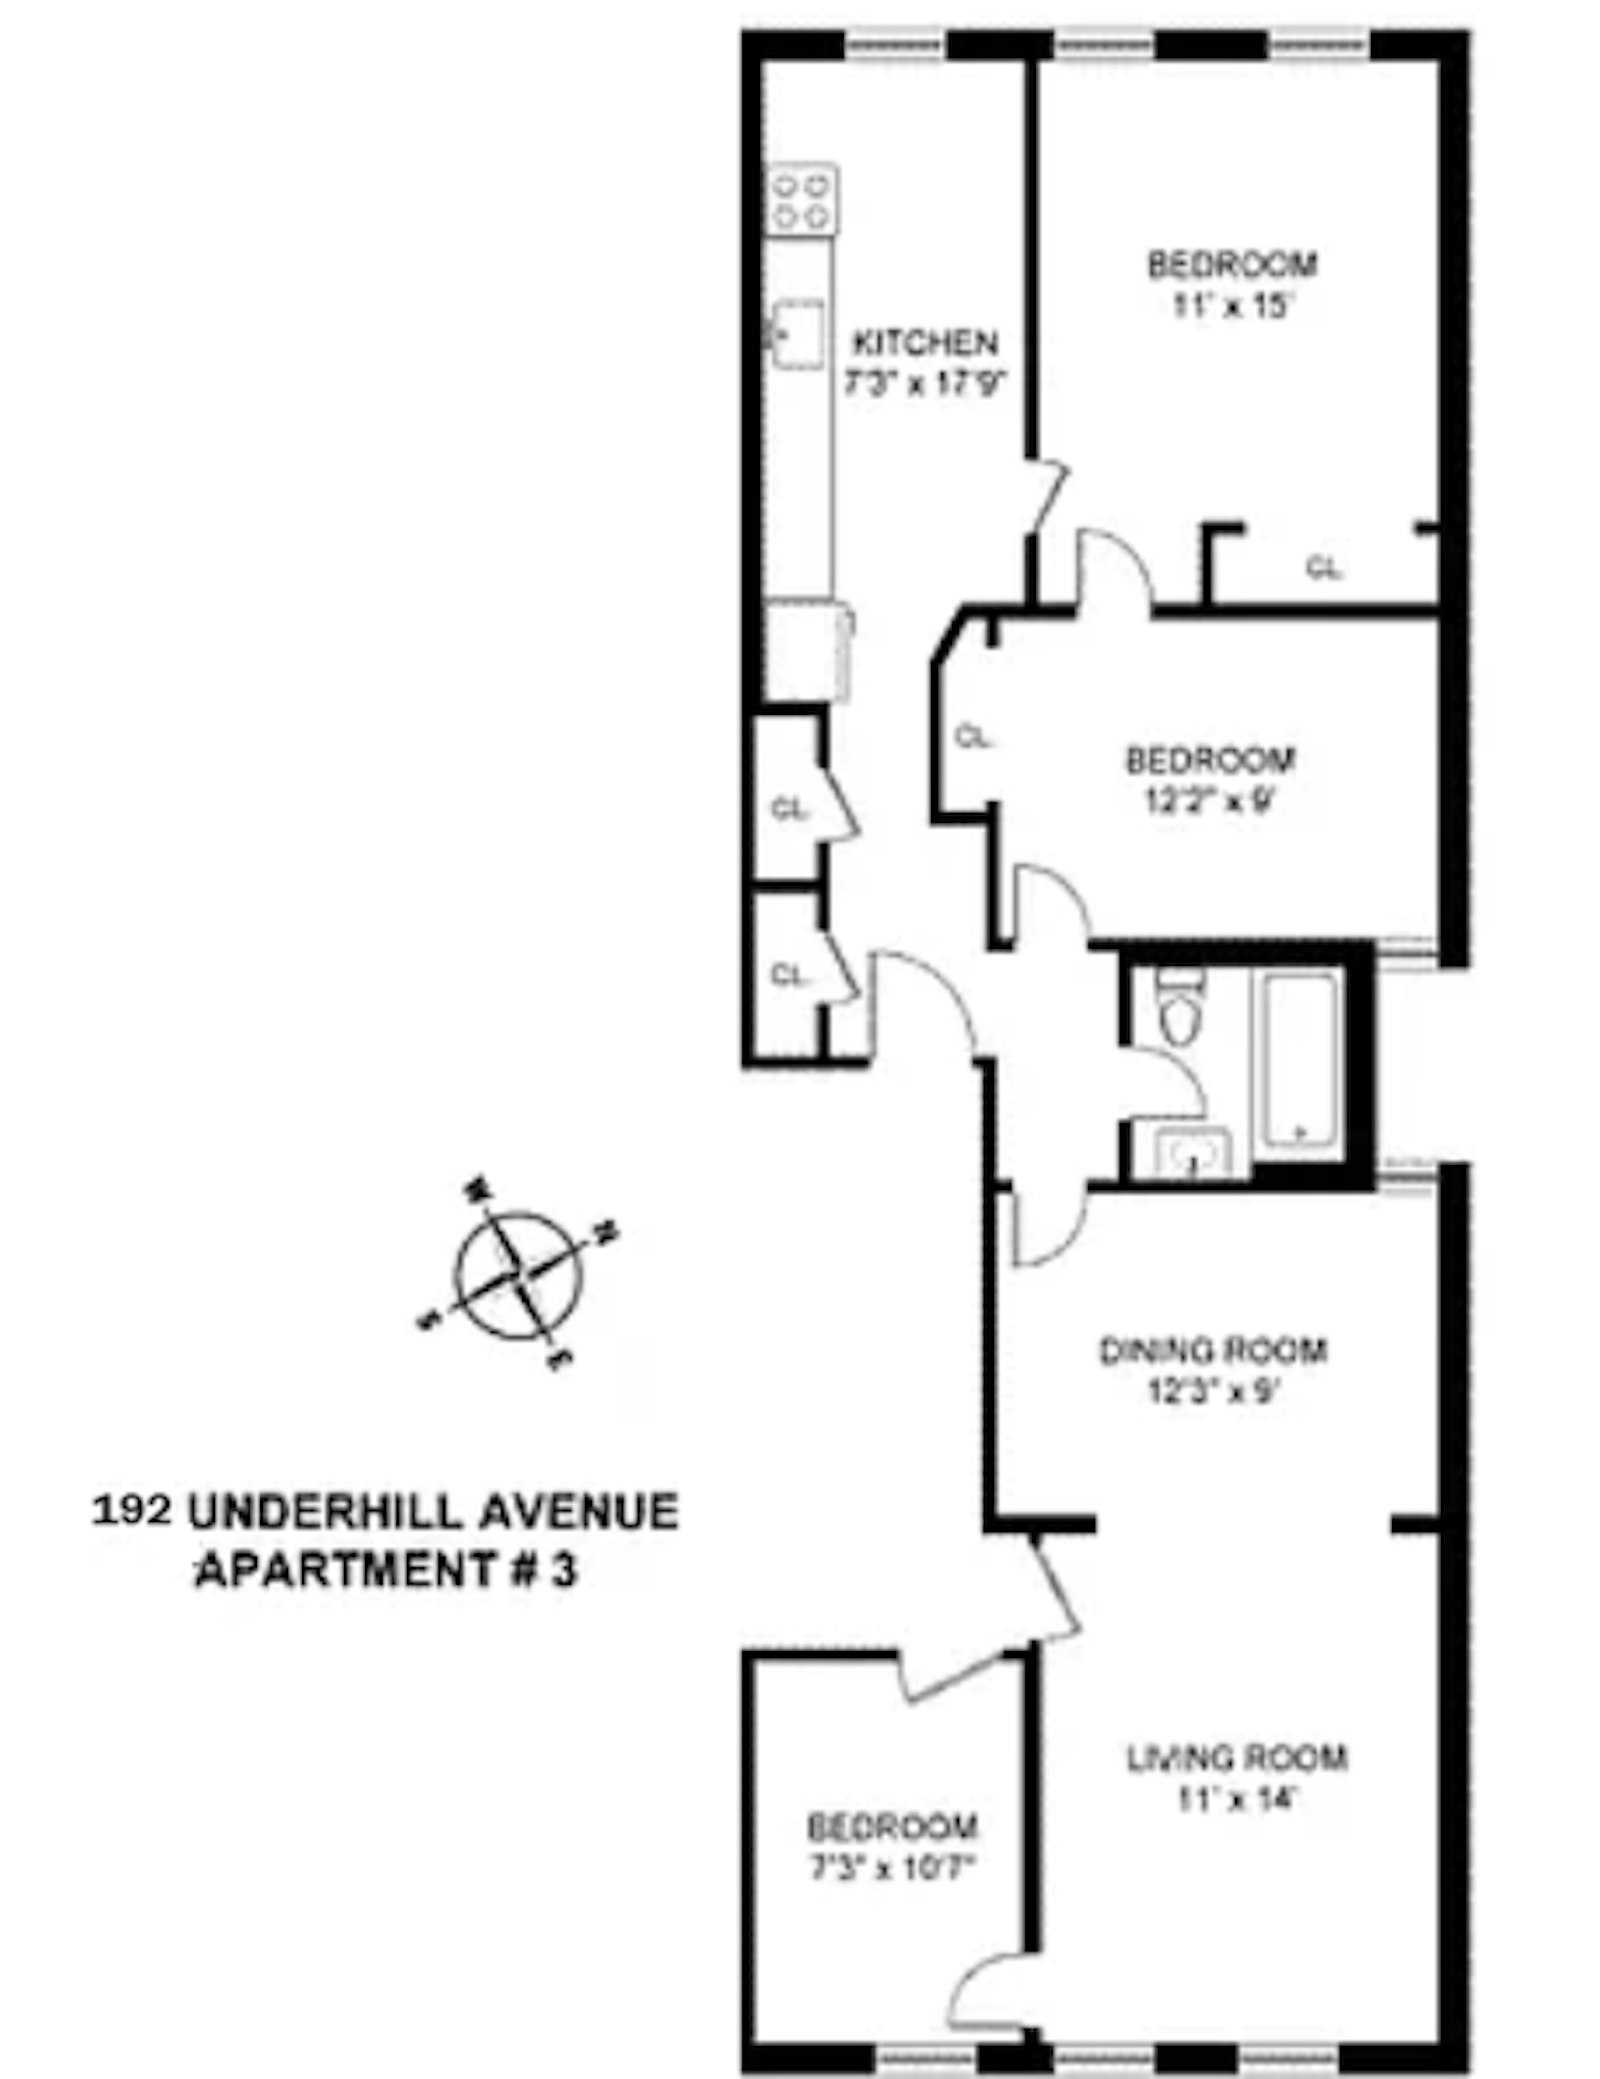 Floorplan for 192 Underhill Avenue, 3